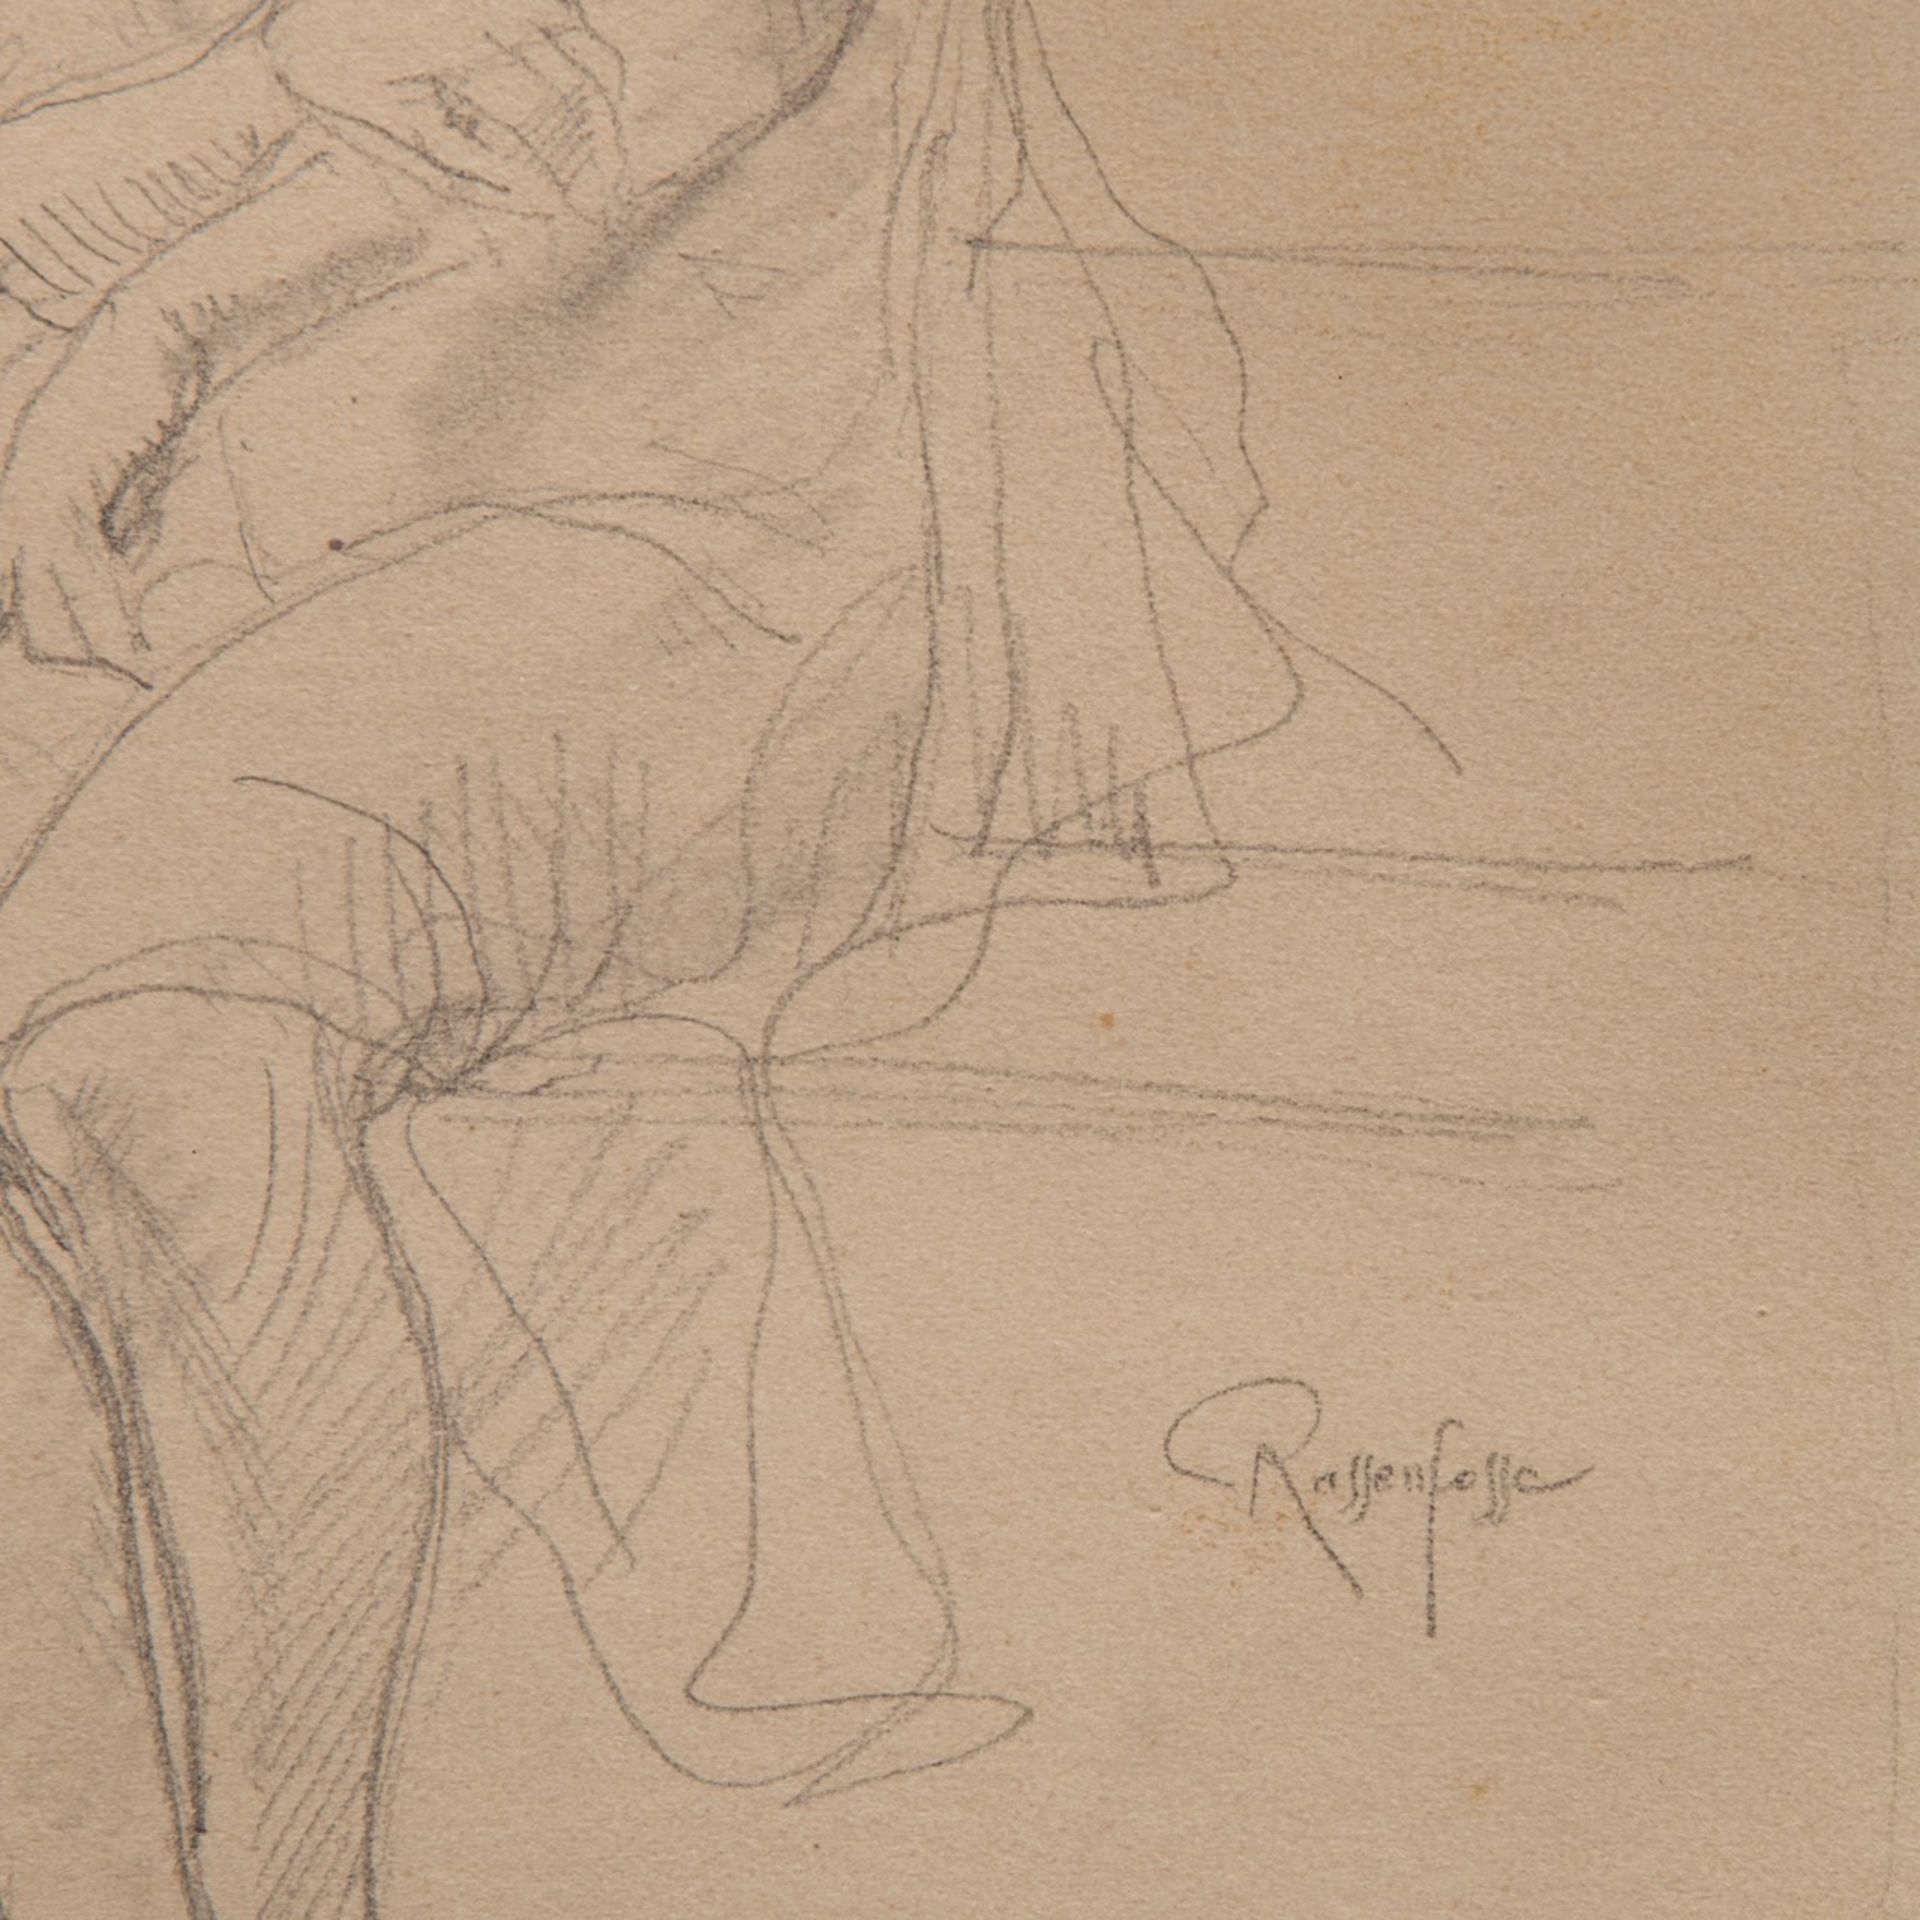 Armand Rassenfosse (1862-1934), seated girl, pencil drawing on paper 26 x 16.5 cm. (10.2 x 6 1/2 in. - Bild 4 aus 6